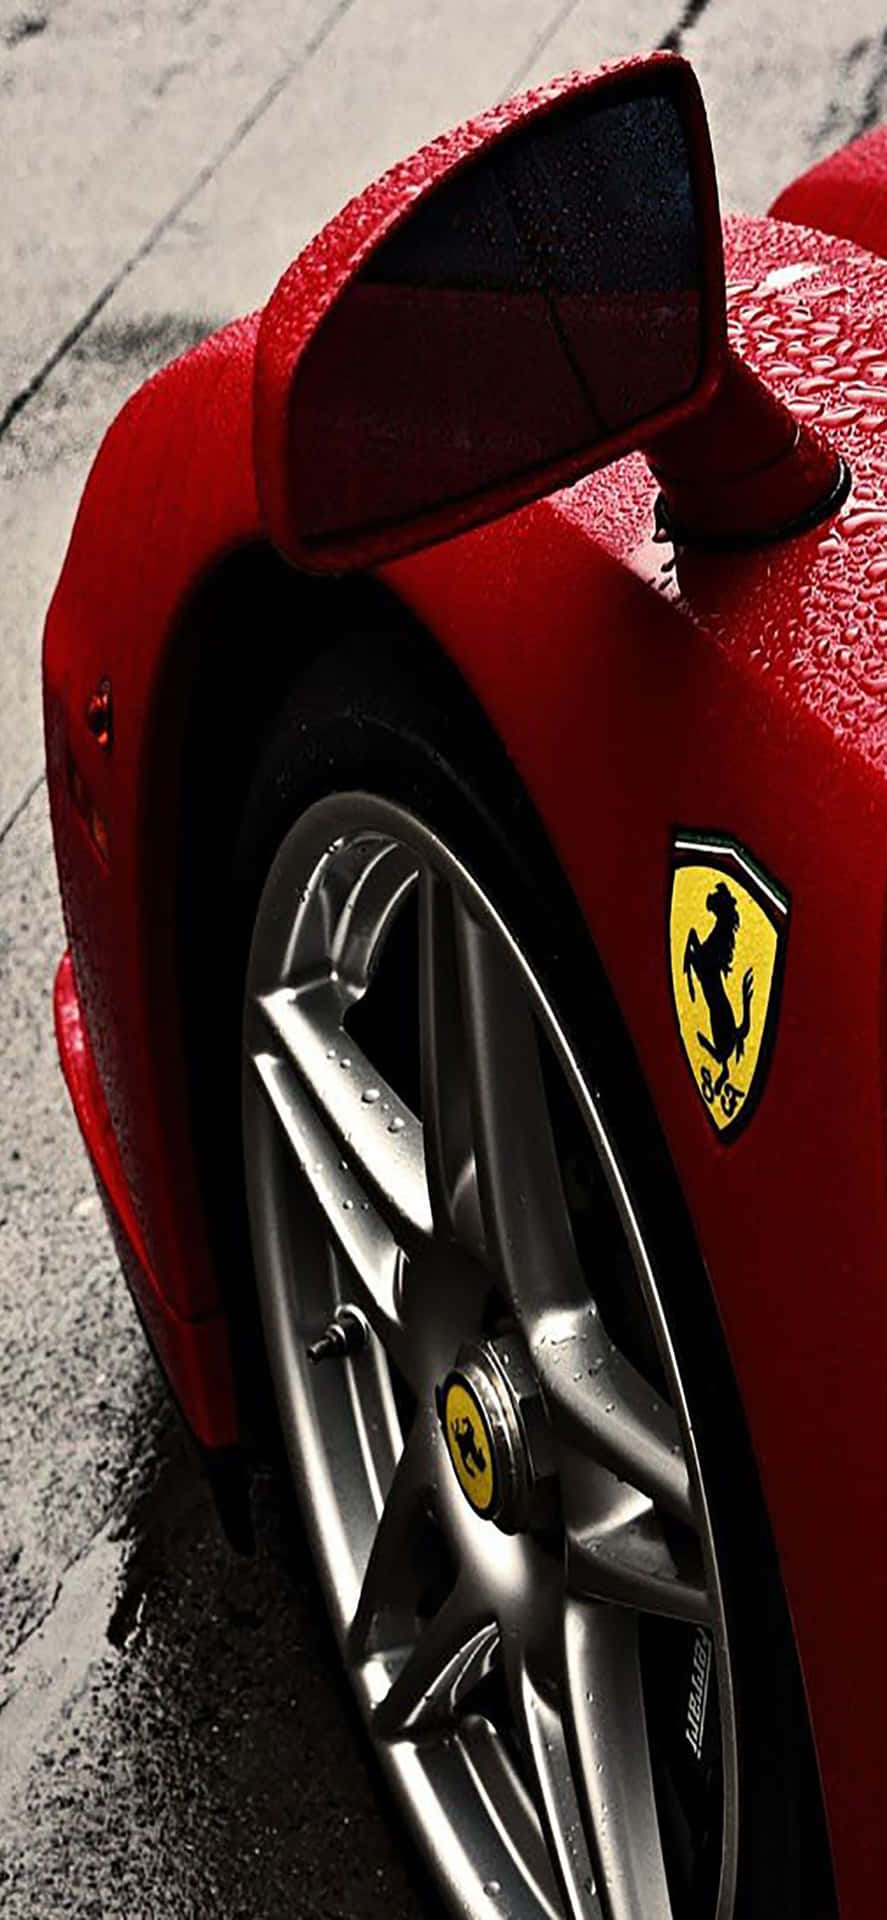 Iphone Xs Max Ferrari Background Side Profile Of A Red Ferrari Enzo